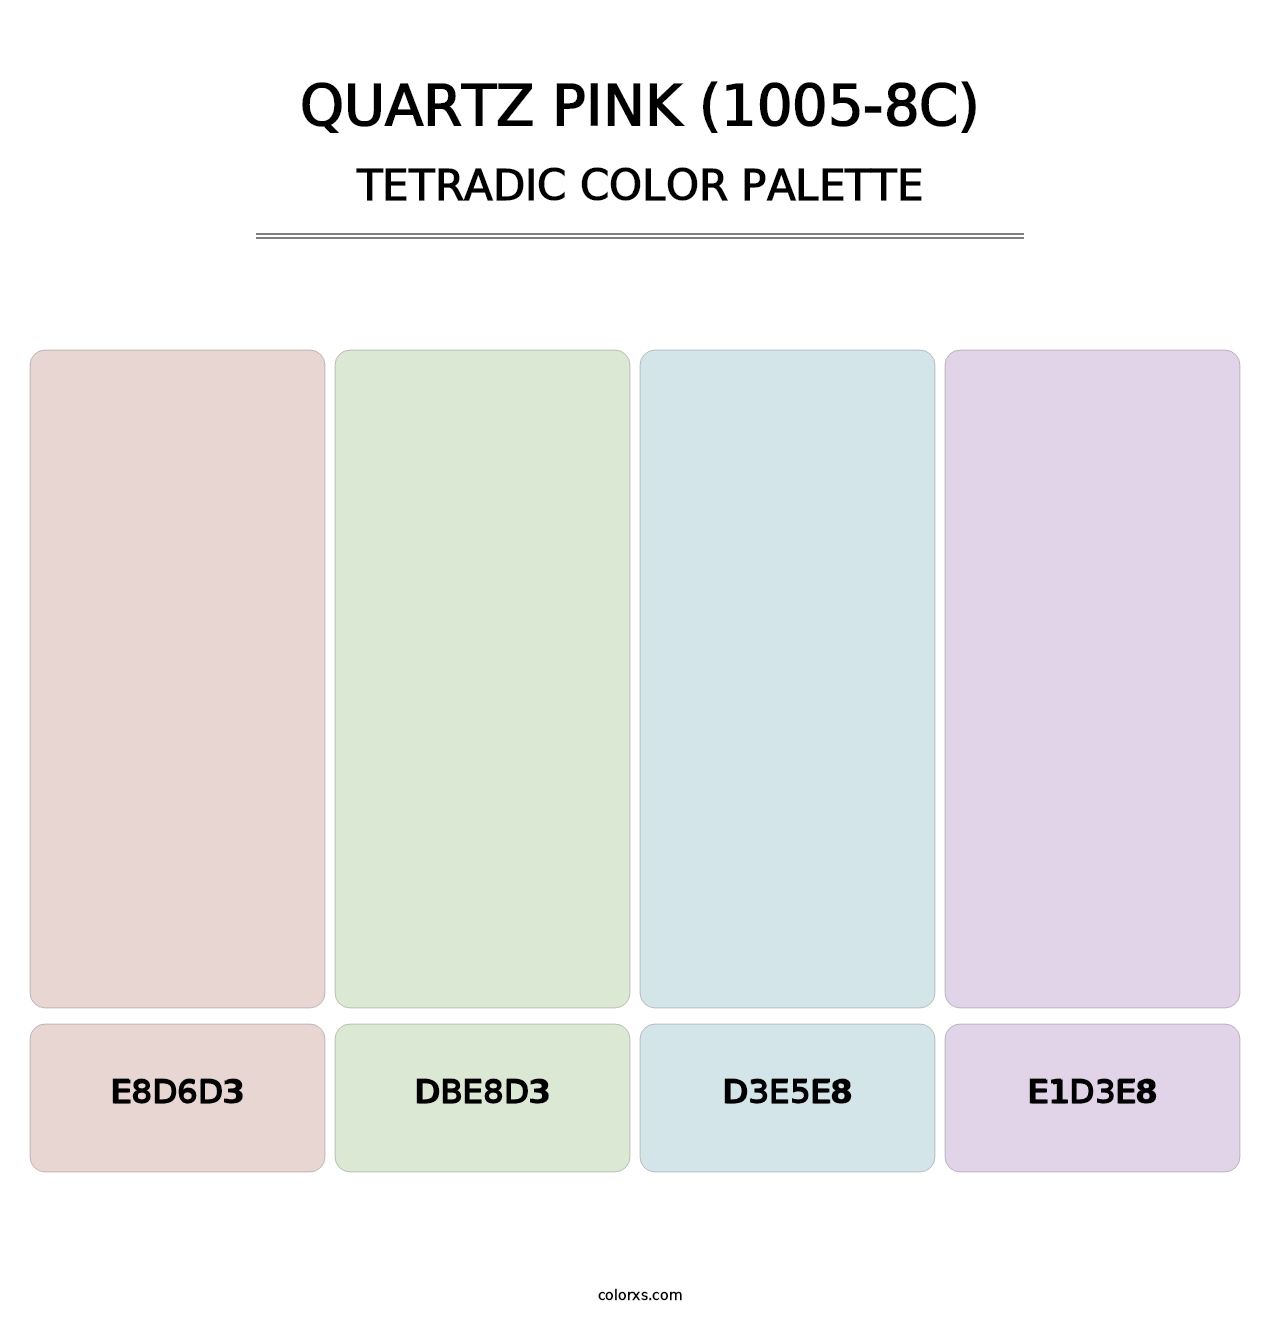 Quartz Pink (1005-8C) - Tetradic Color Palette